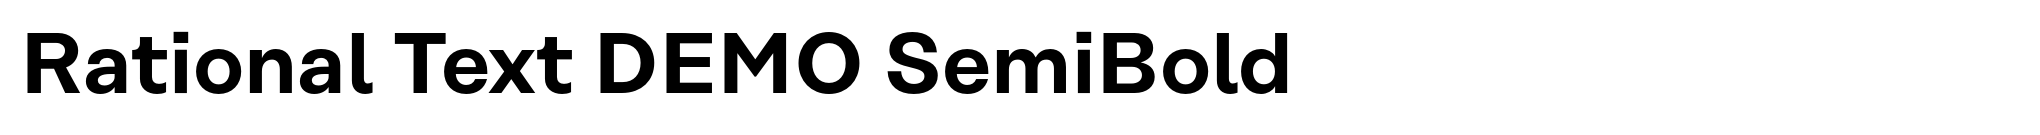 Rational Text DEMO SemiBold image